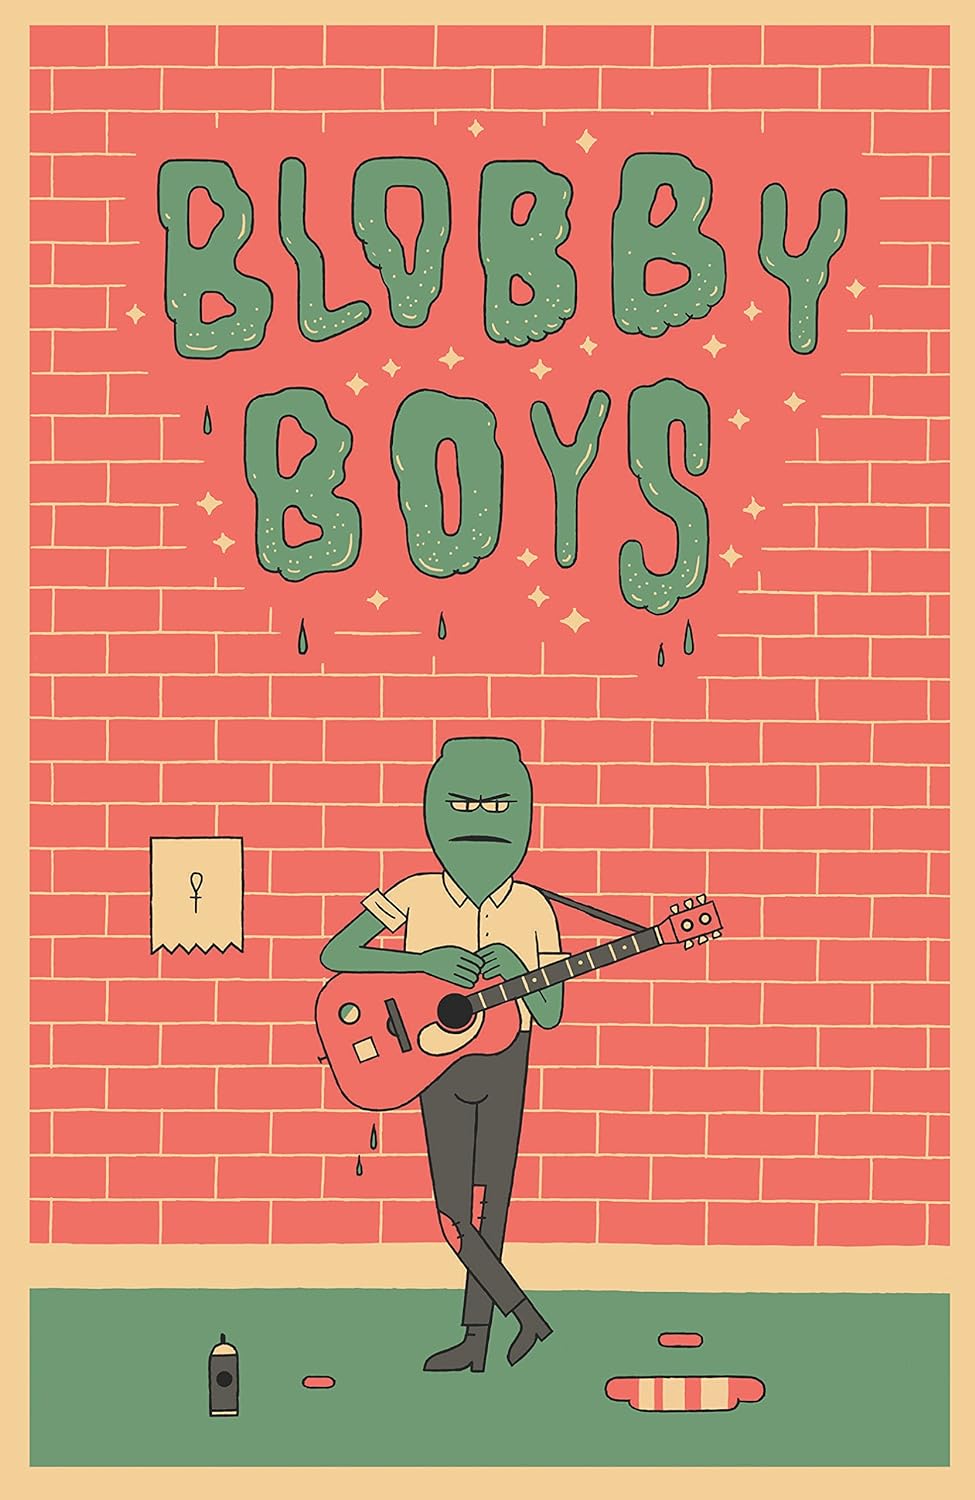 Blobby Boys Volume 1 Graphic Novel